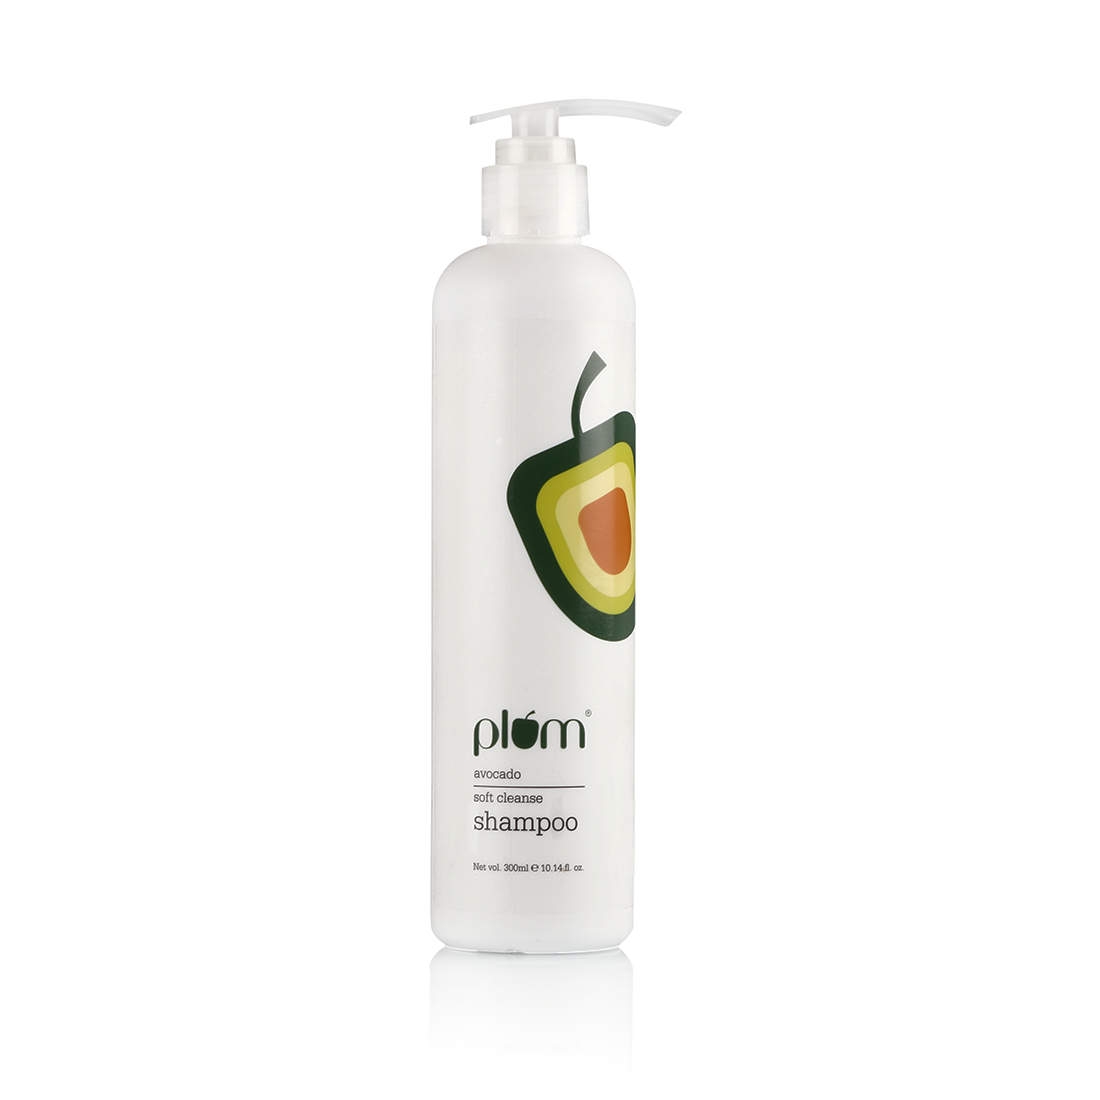 plum be good | Plum Avocado Soft Cleanse Shampoo | 300 ml 0